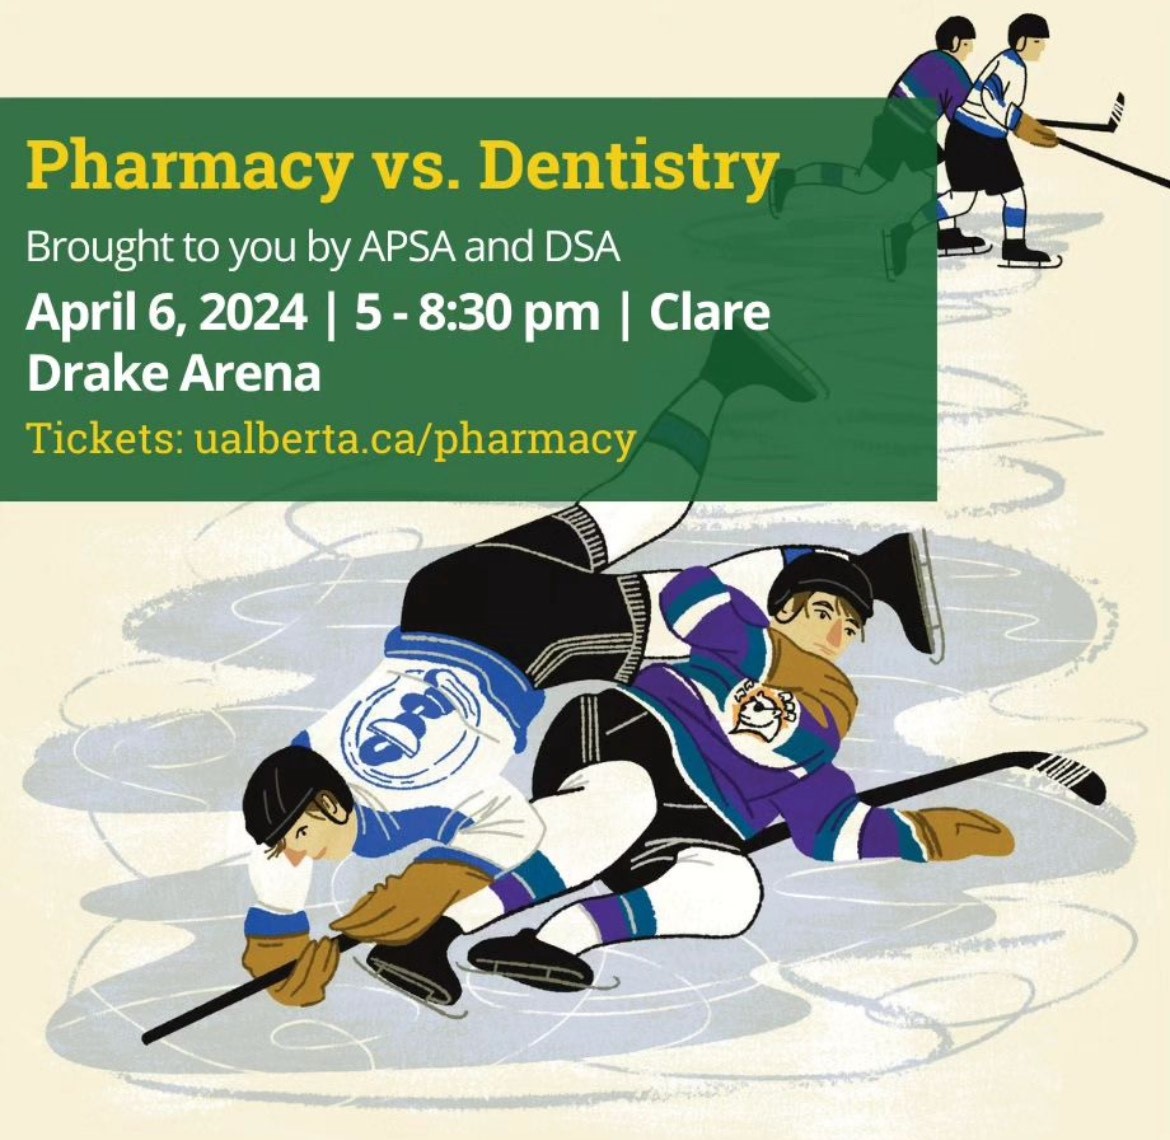 Pharmacy vs Dentistry Hockey poster